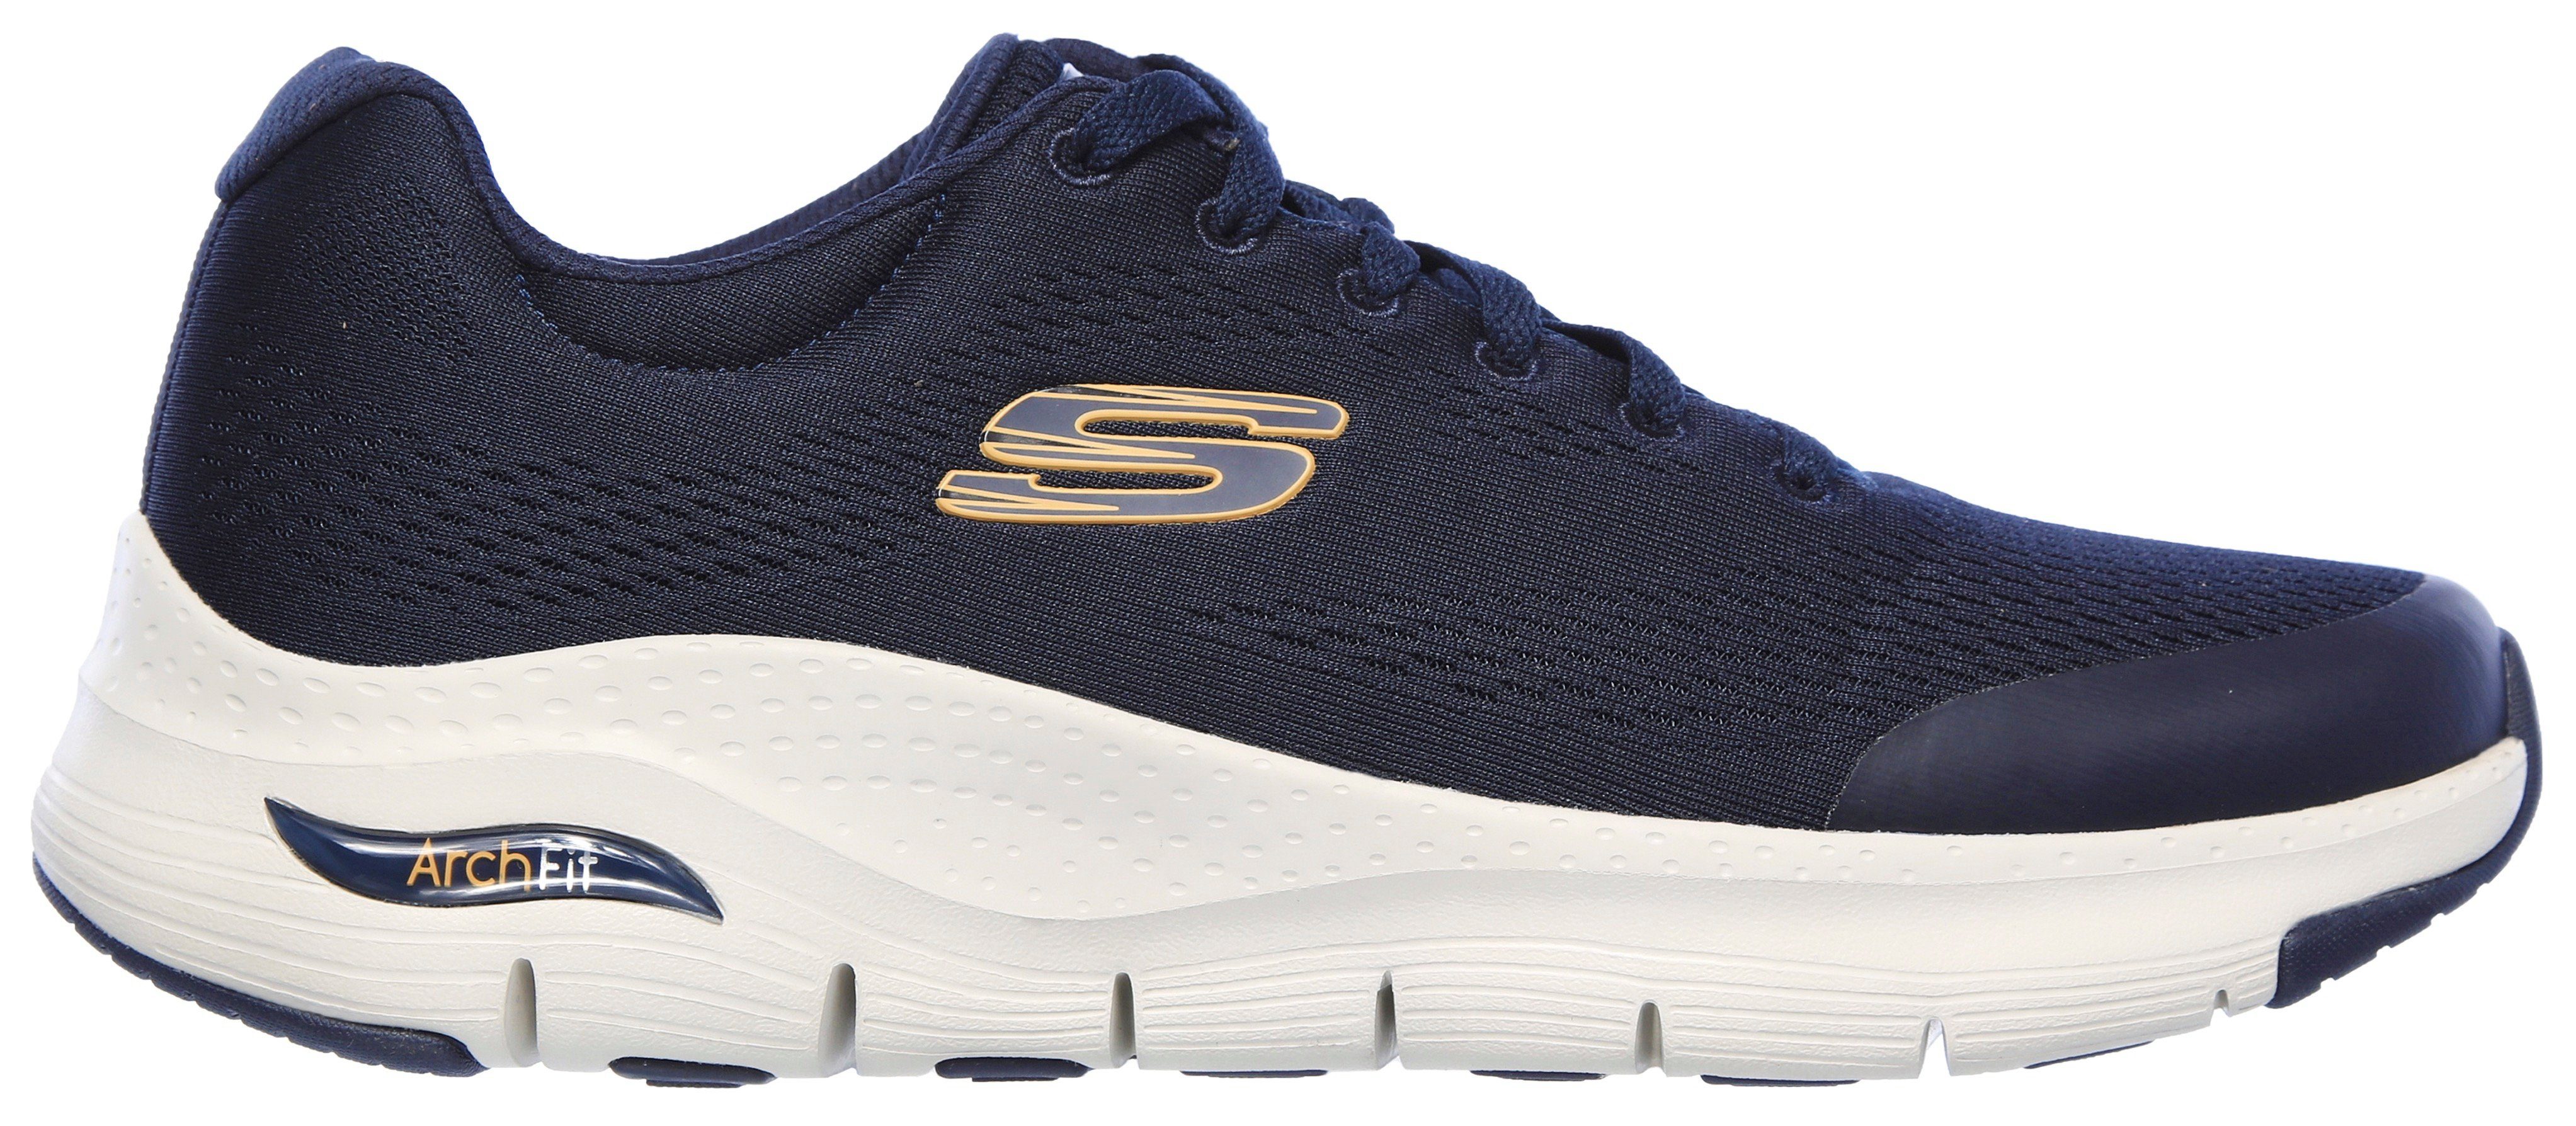 Skechers ARCH FIT Sneaker / Fit-Innensohle mit Arch weiß dunkelblau